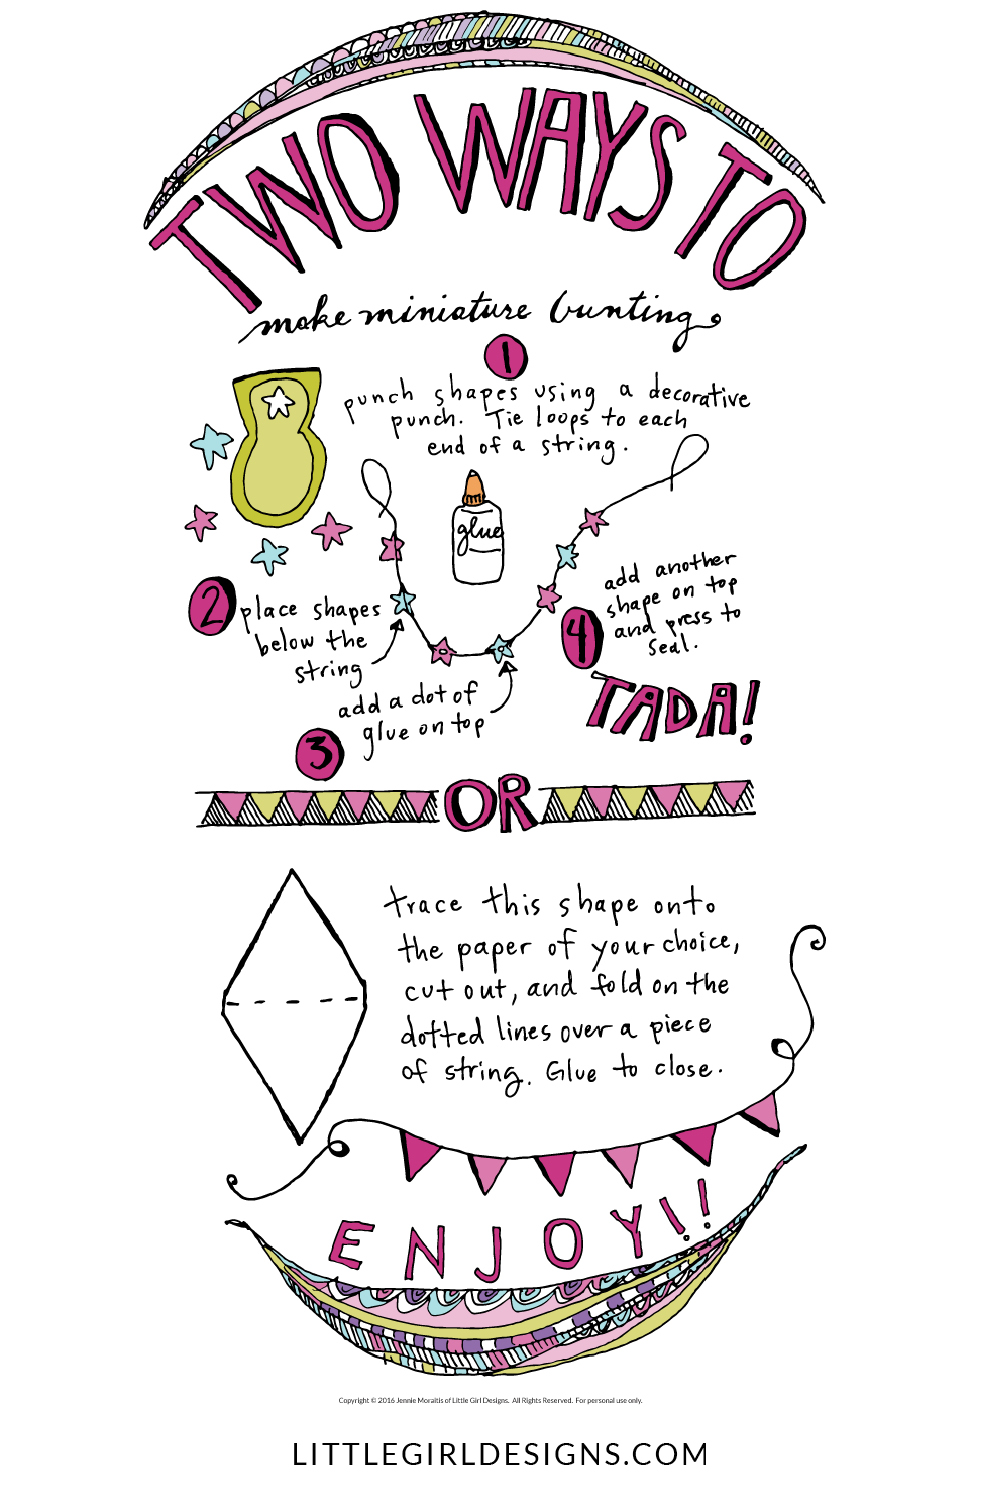 Two Different Ways to Make Miniature Bunting - illustration by Jennie Moratis of littlegirldesigns.com